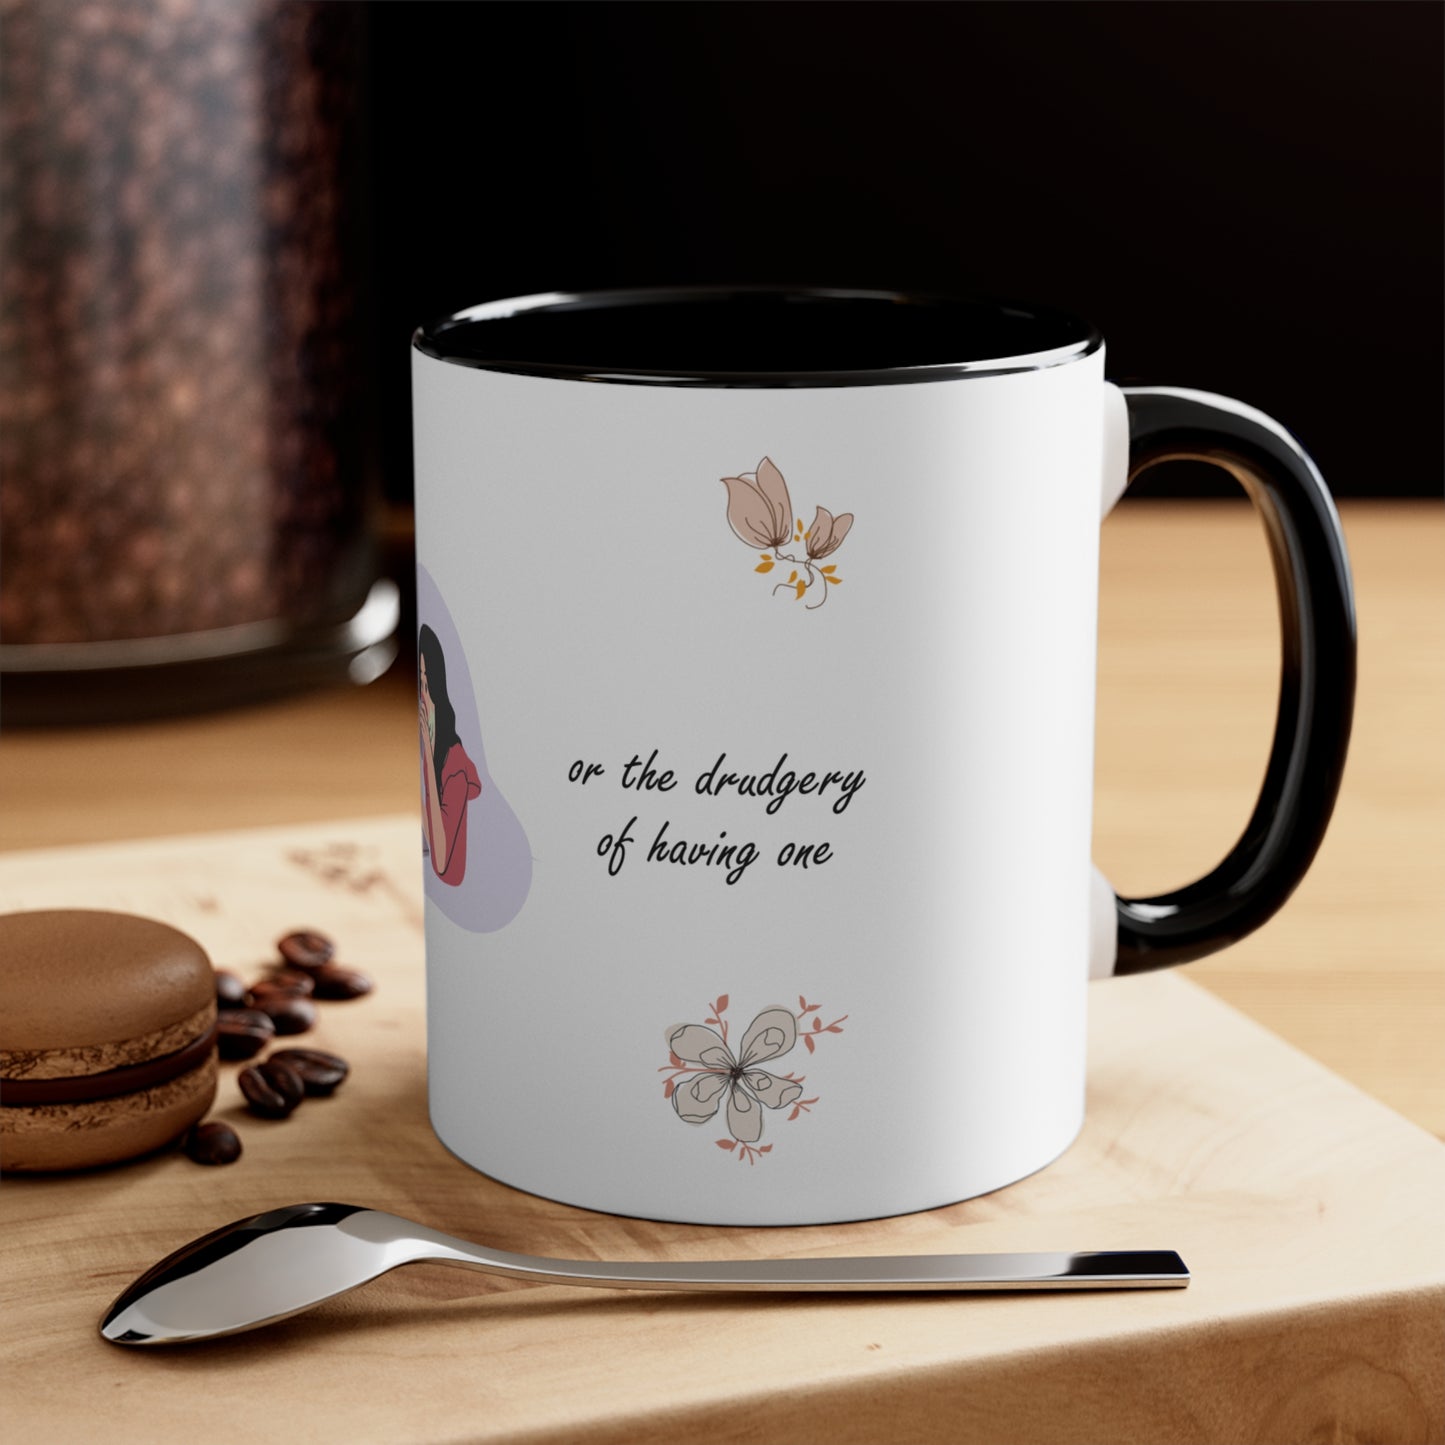 Sarcasm Happens - Anxiety or Drudgery, Coffee Mug